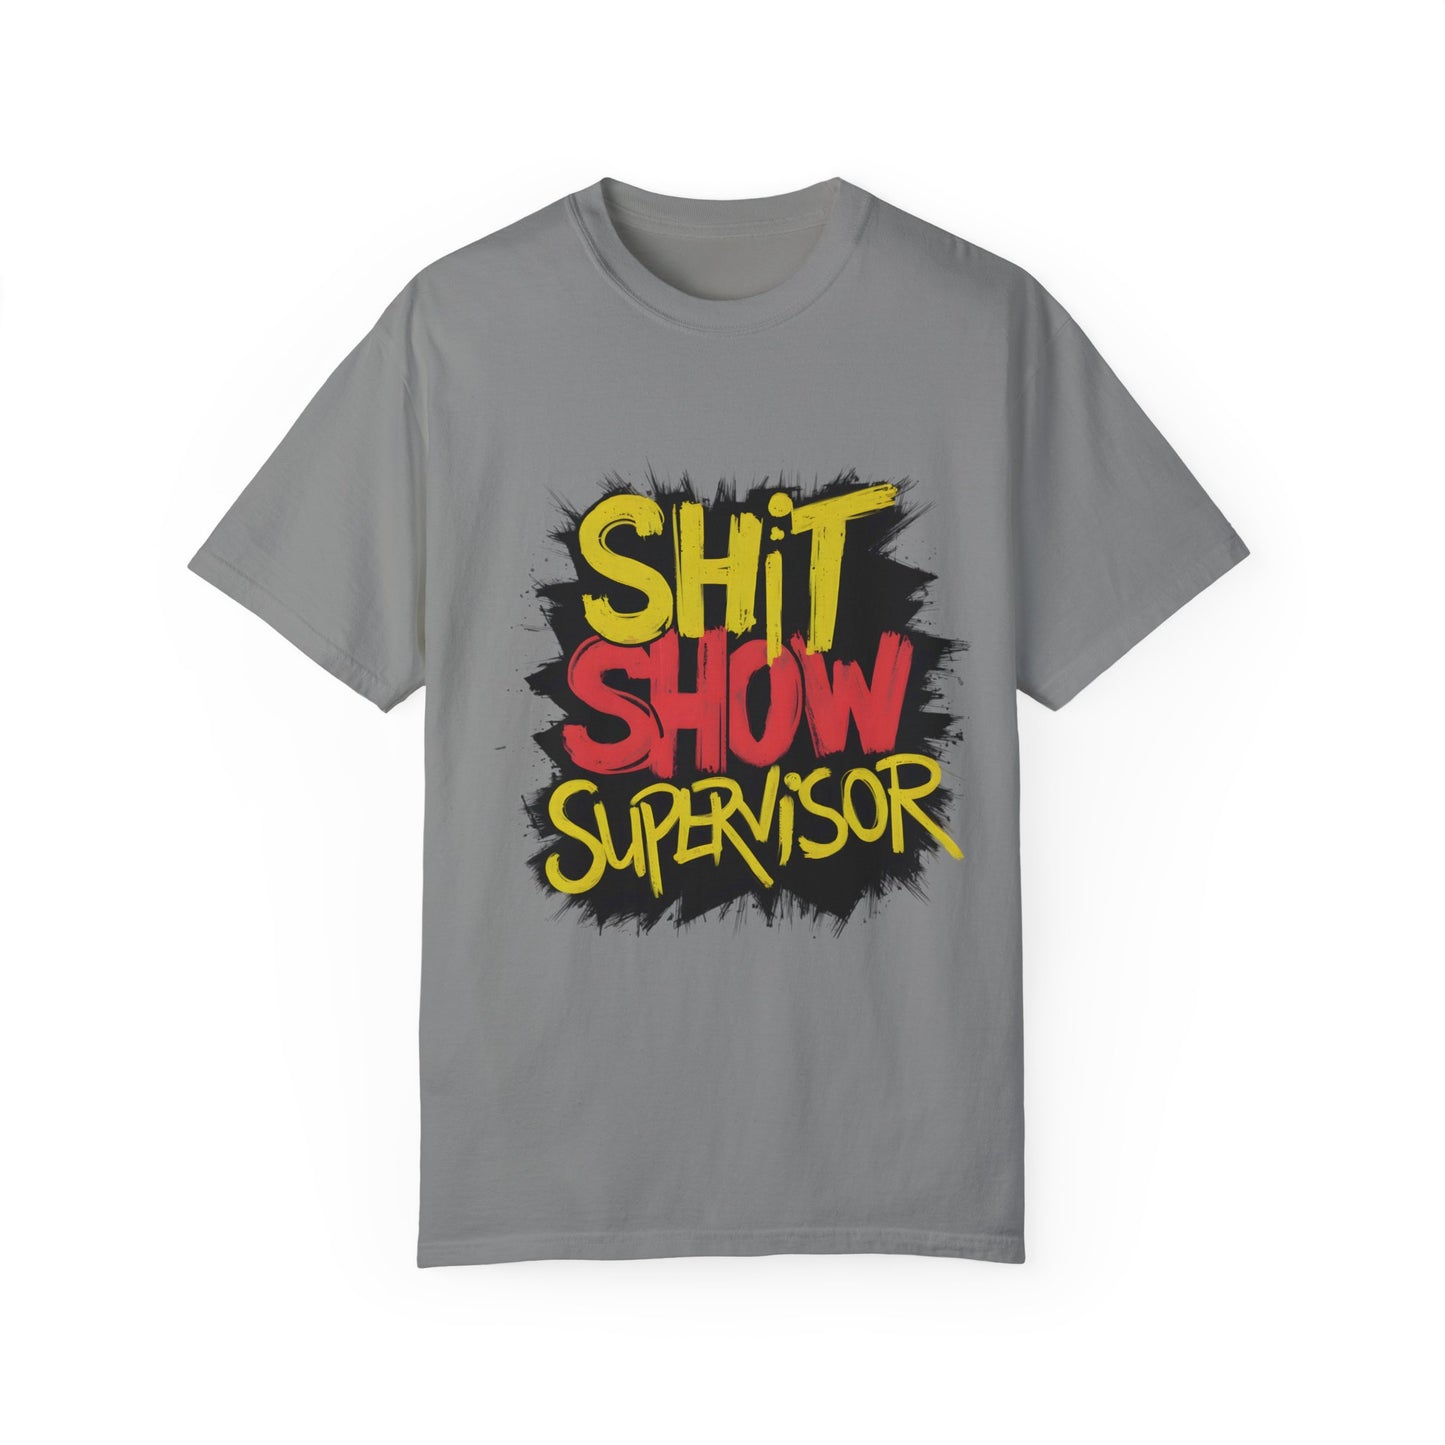 Shit Show Supervisor Urban Sarcastic Graphic Unisex Garment Dyed T-shirt Cotton Funny Humorous Graphic Soft Premium Unisex Men Women Granite T-shirt Birthday Gift-4